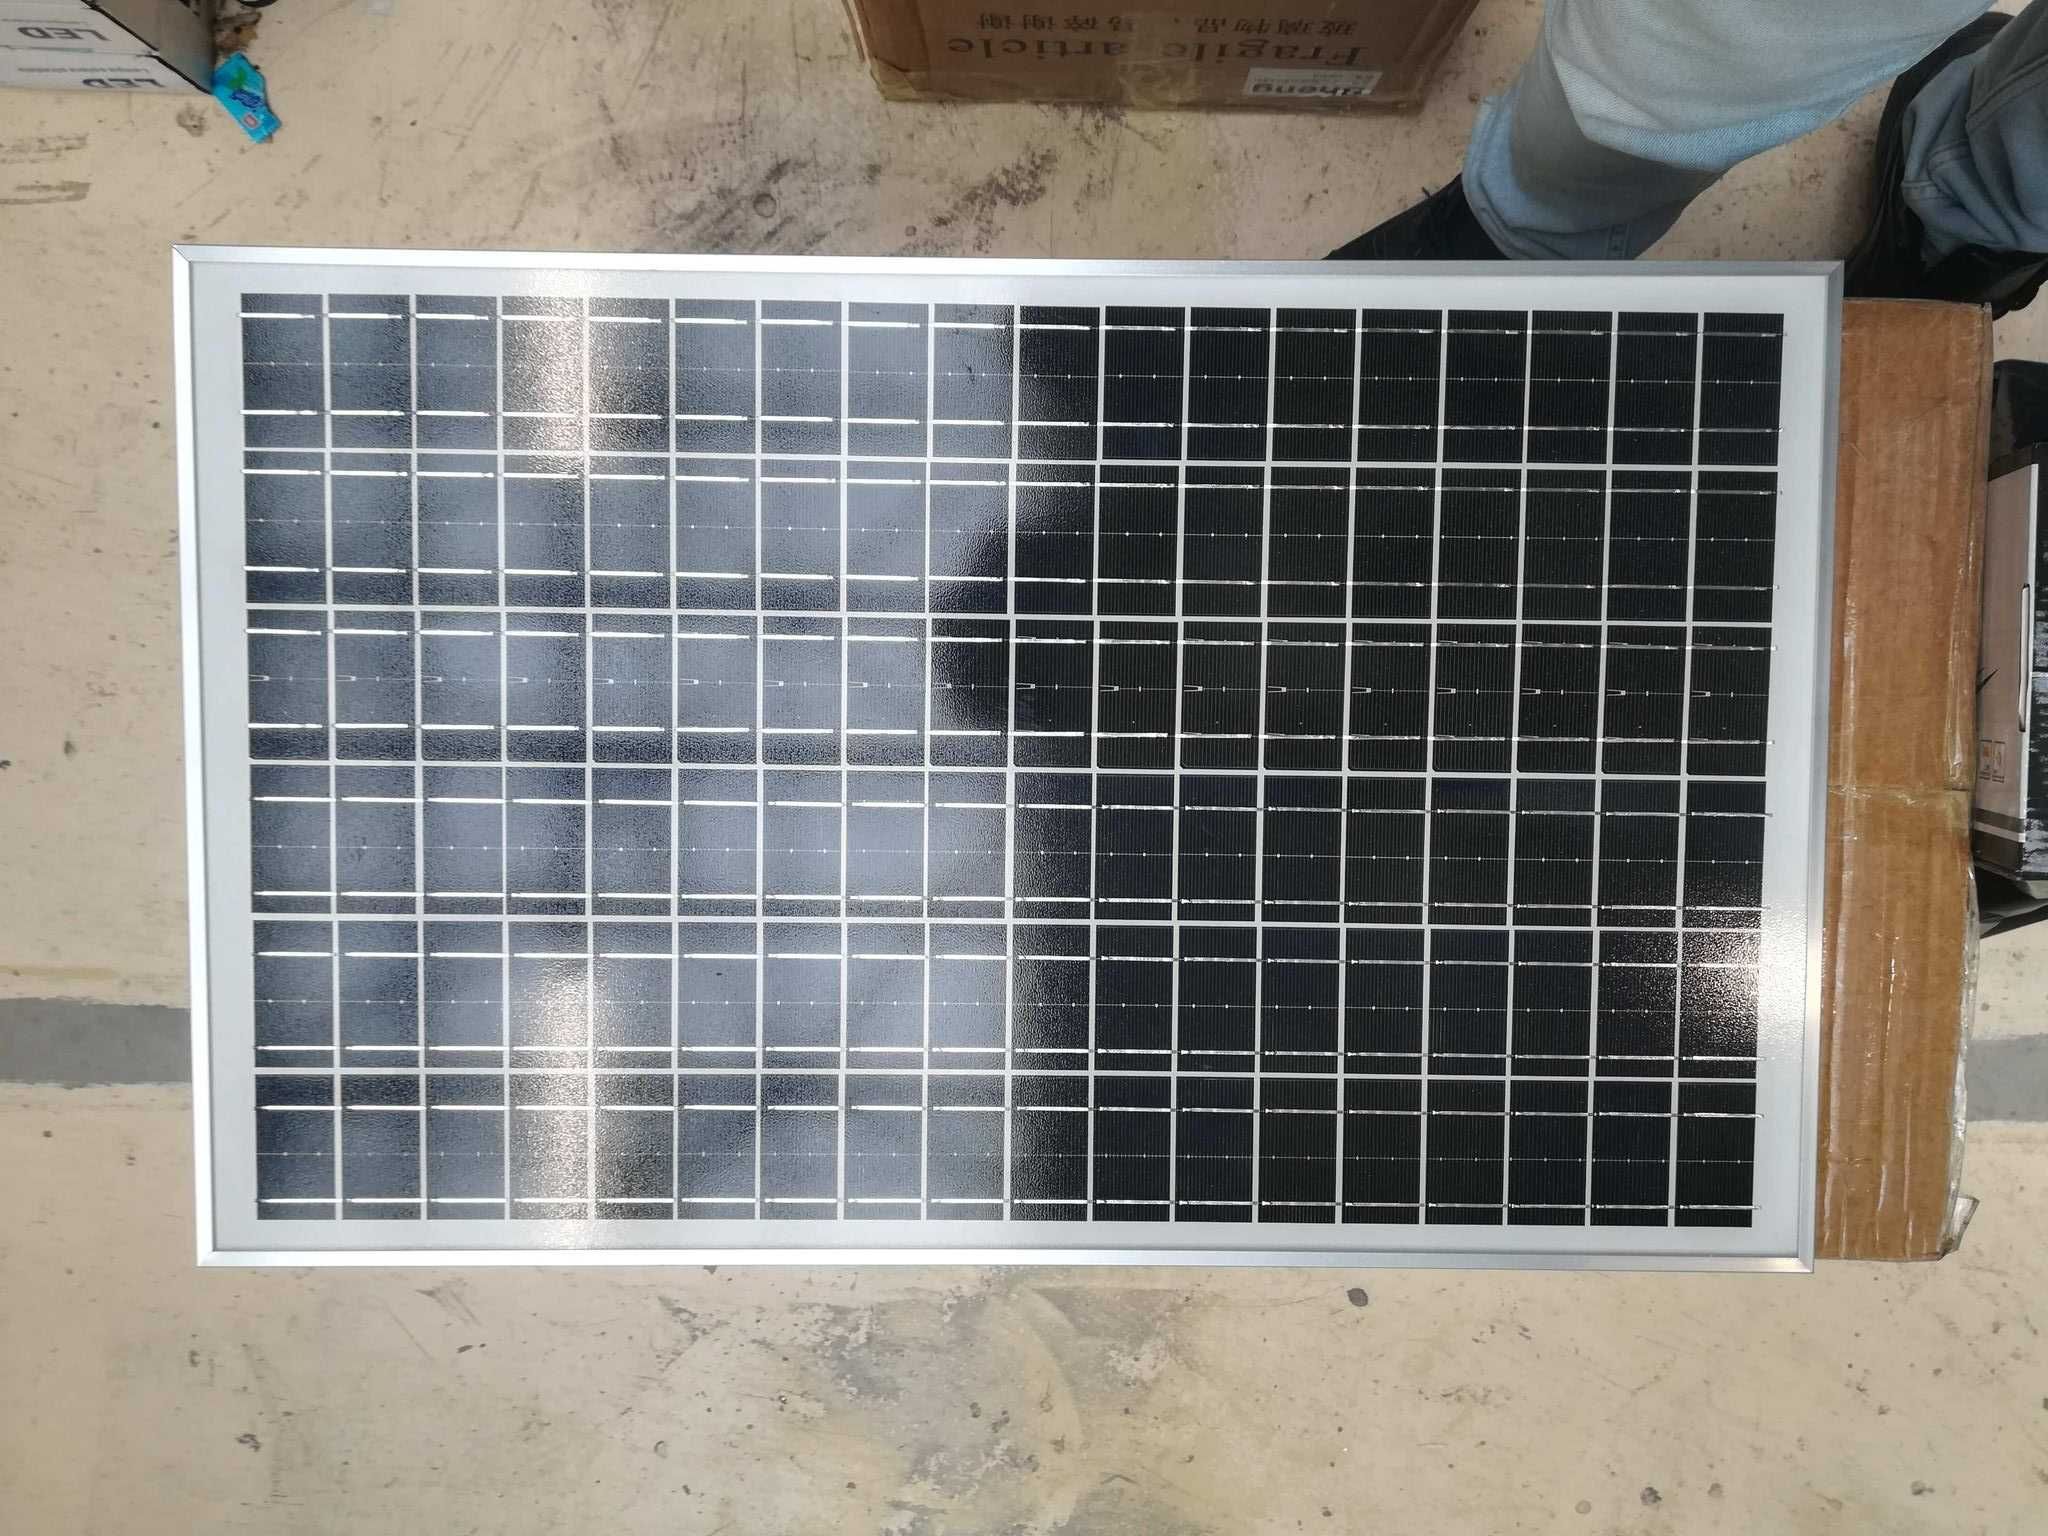 Panou solar fotovoltaic 30W dimensiune 36x58cm 12V